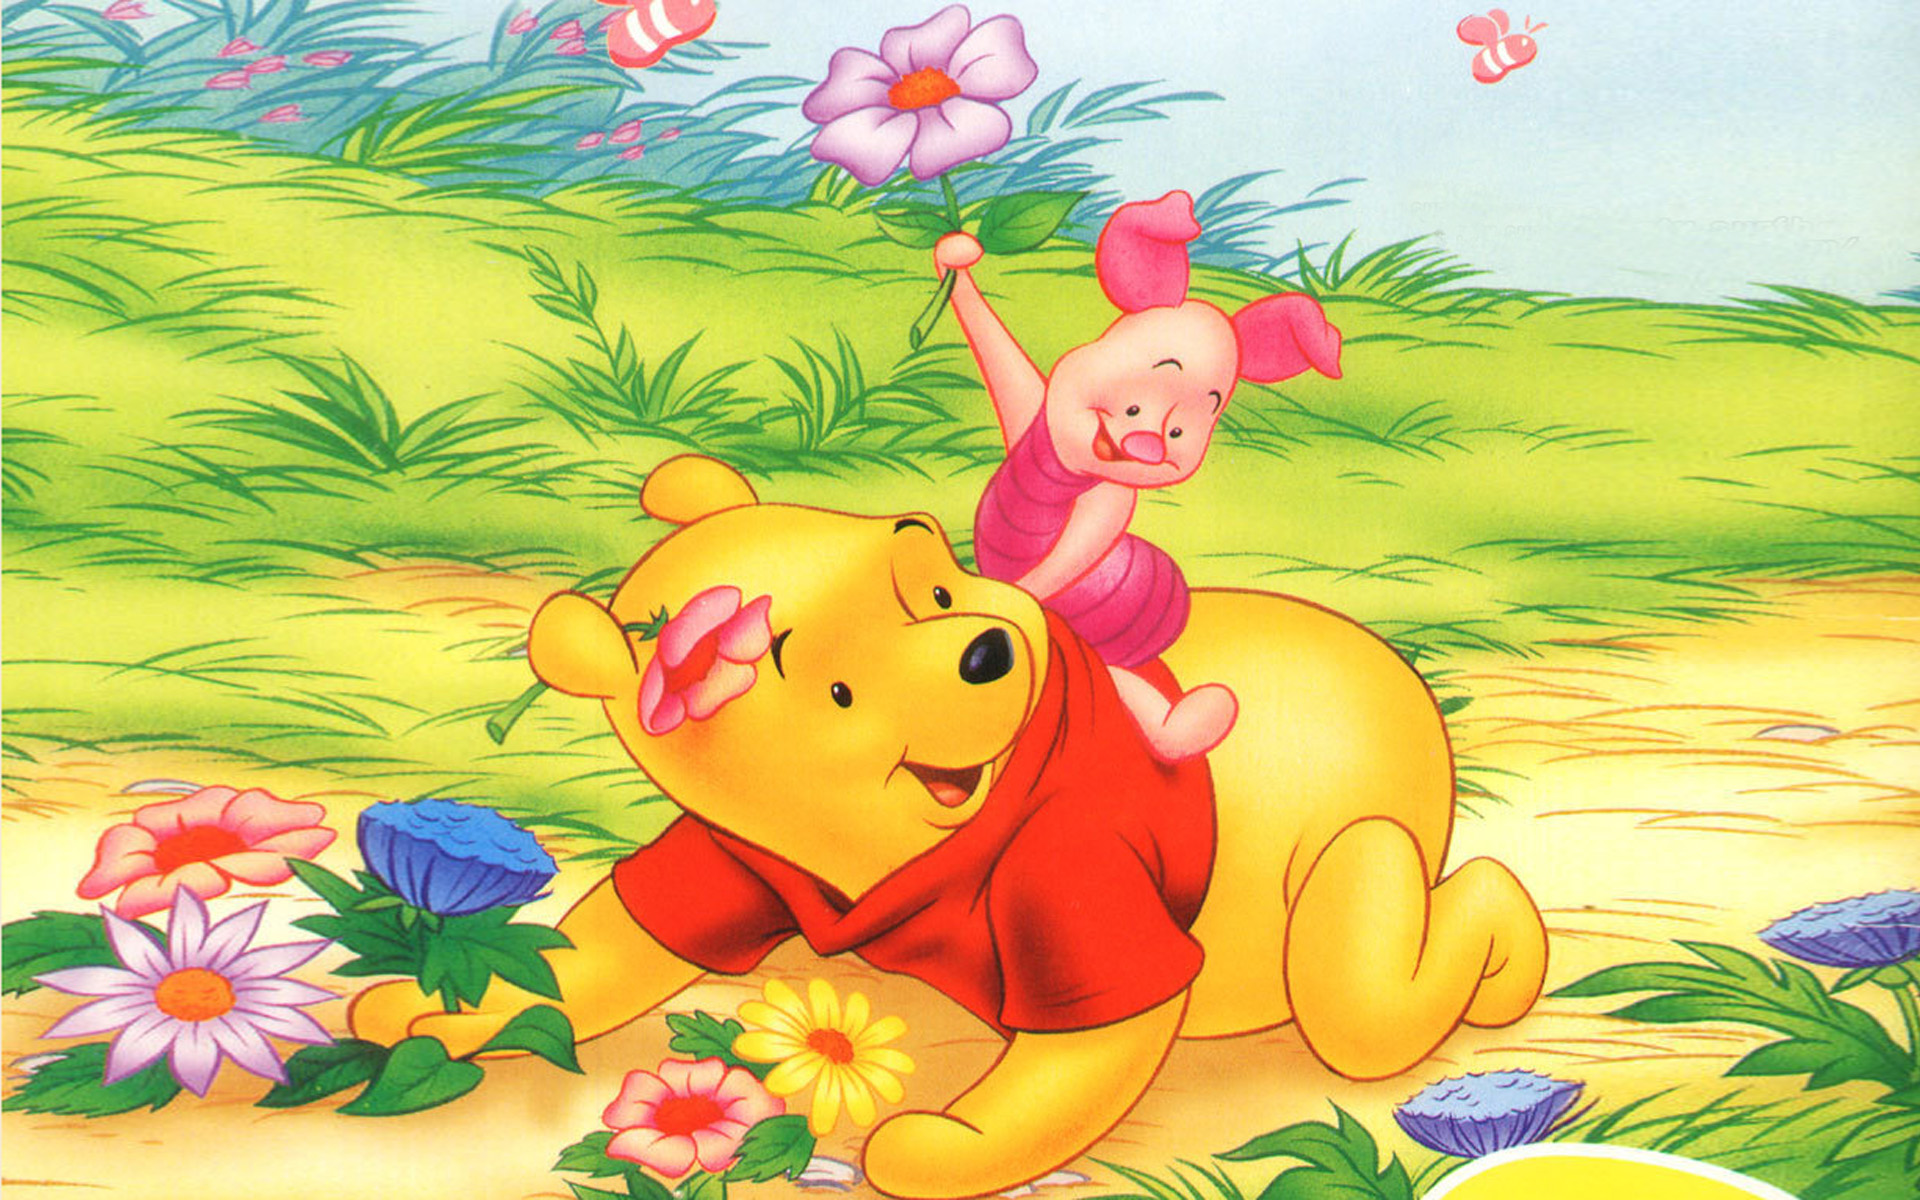 Piglet-and-Winnie The Pooh-Spring flowers-Cartoon-Disney-Image-HD Wallpaper...